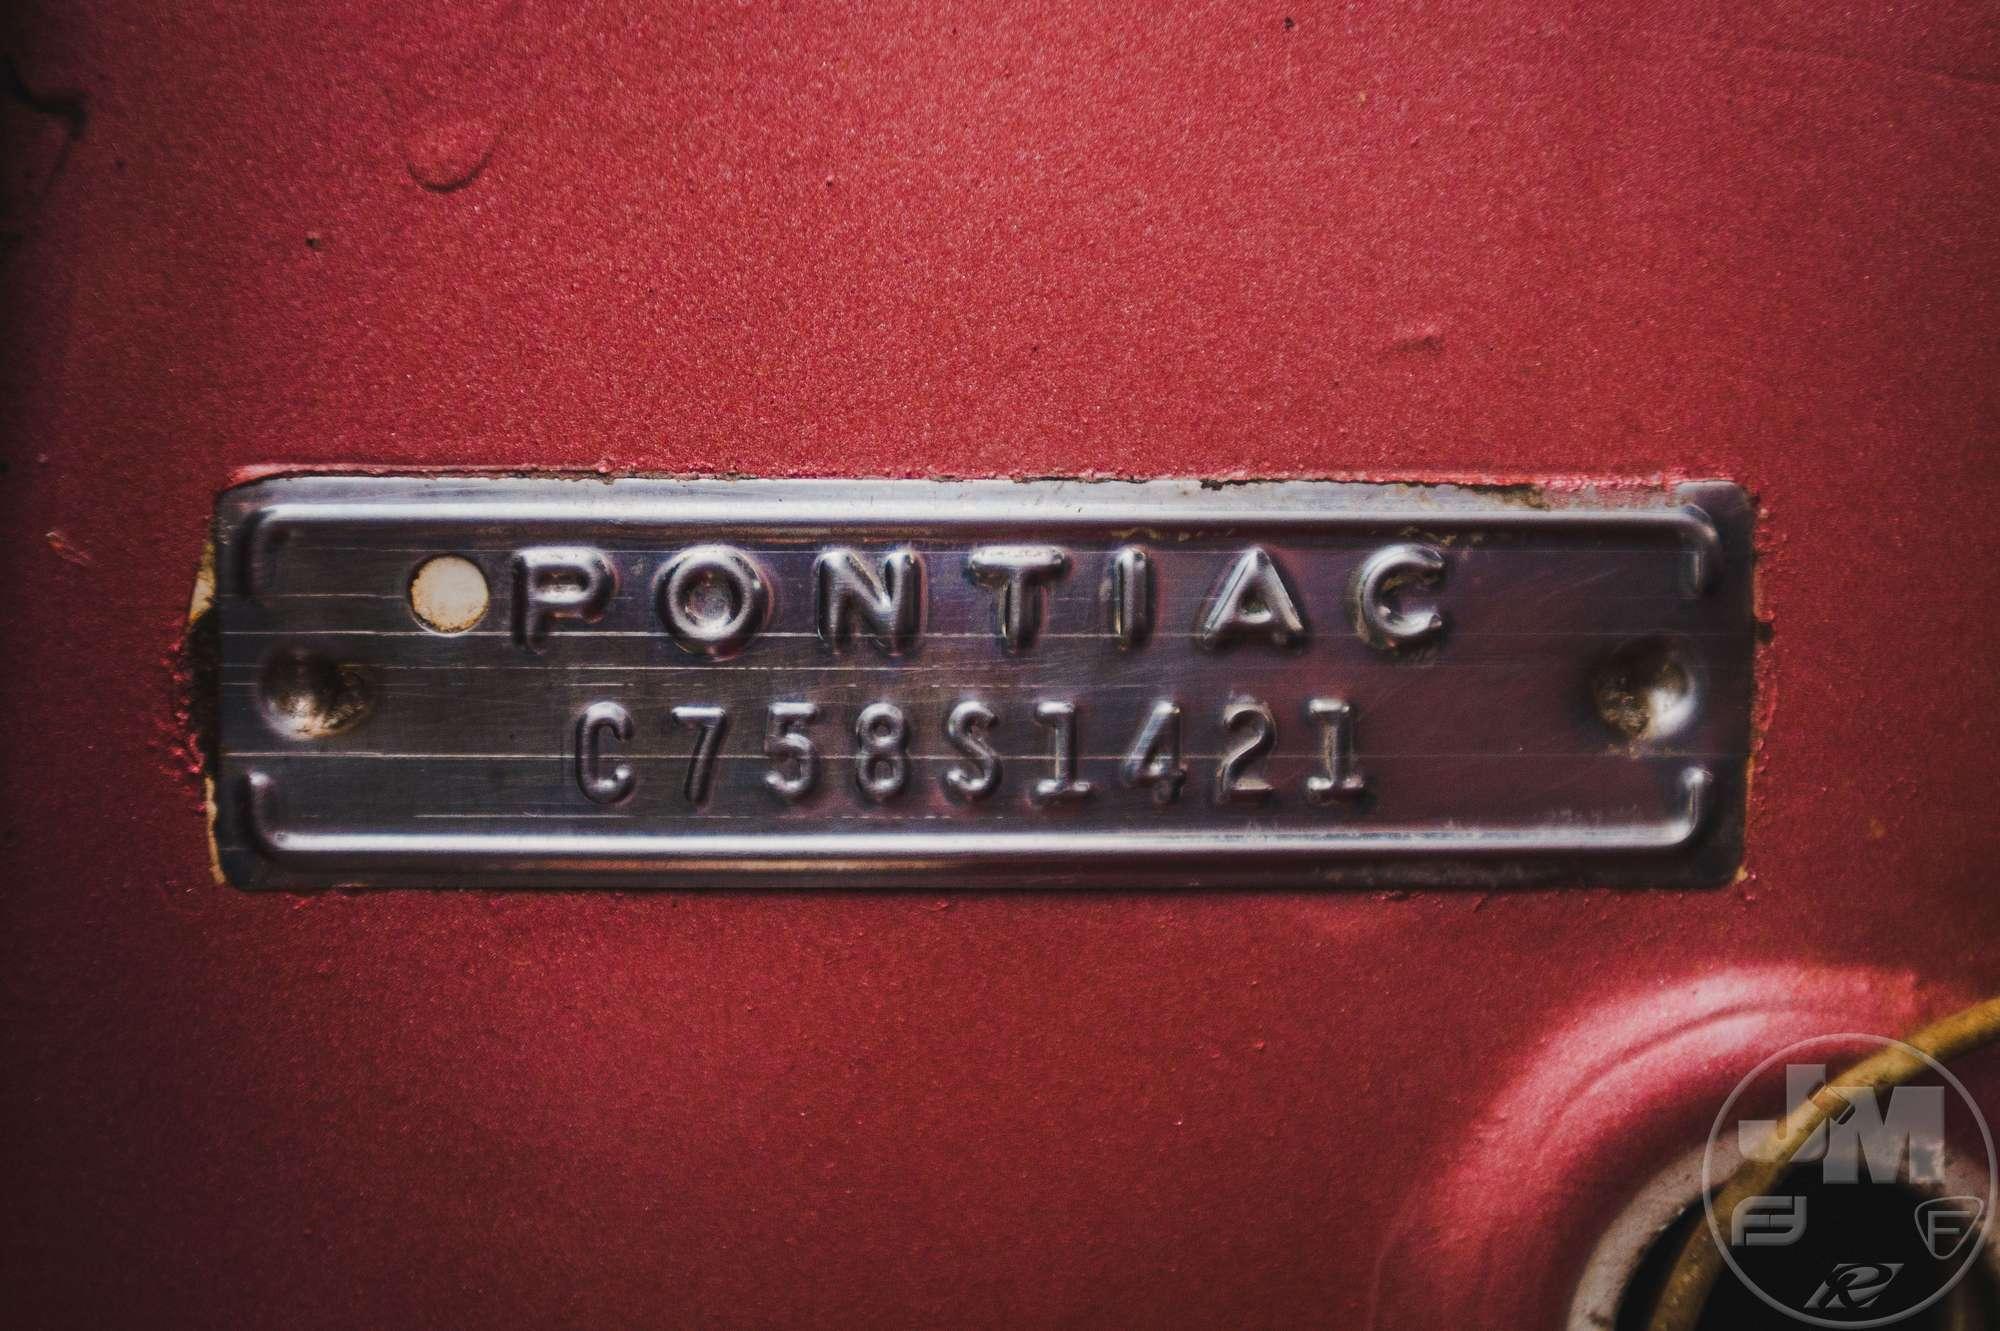 1958 PONTIAC CHIEFTAIN VIN: C758S1421 SEDAN